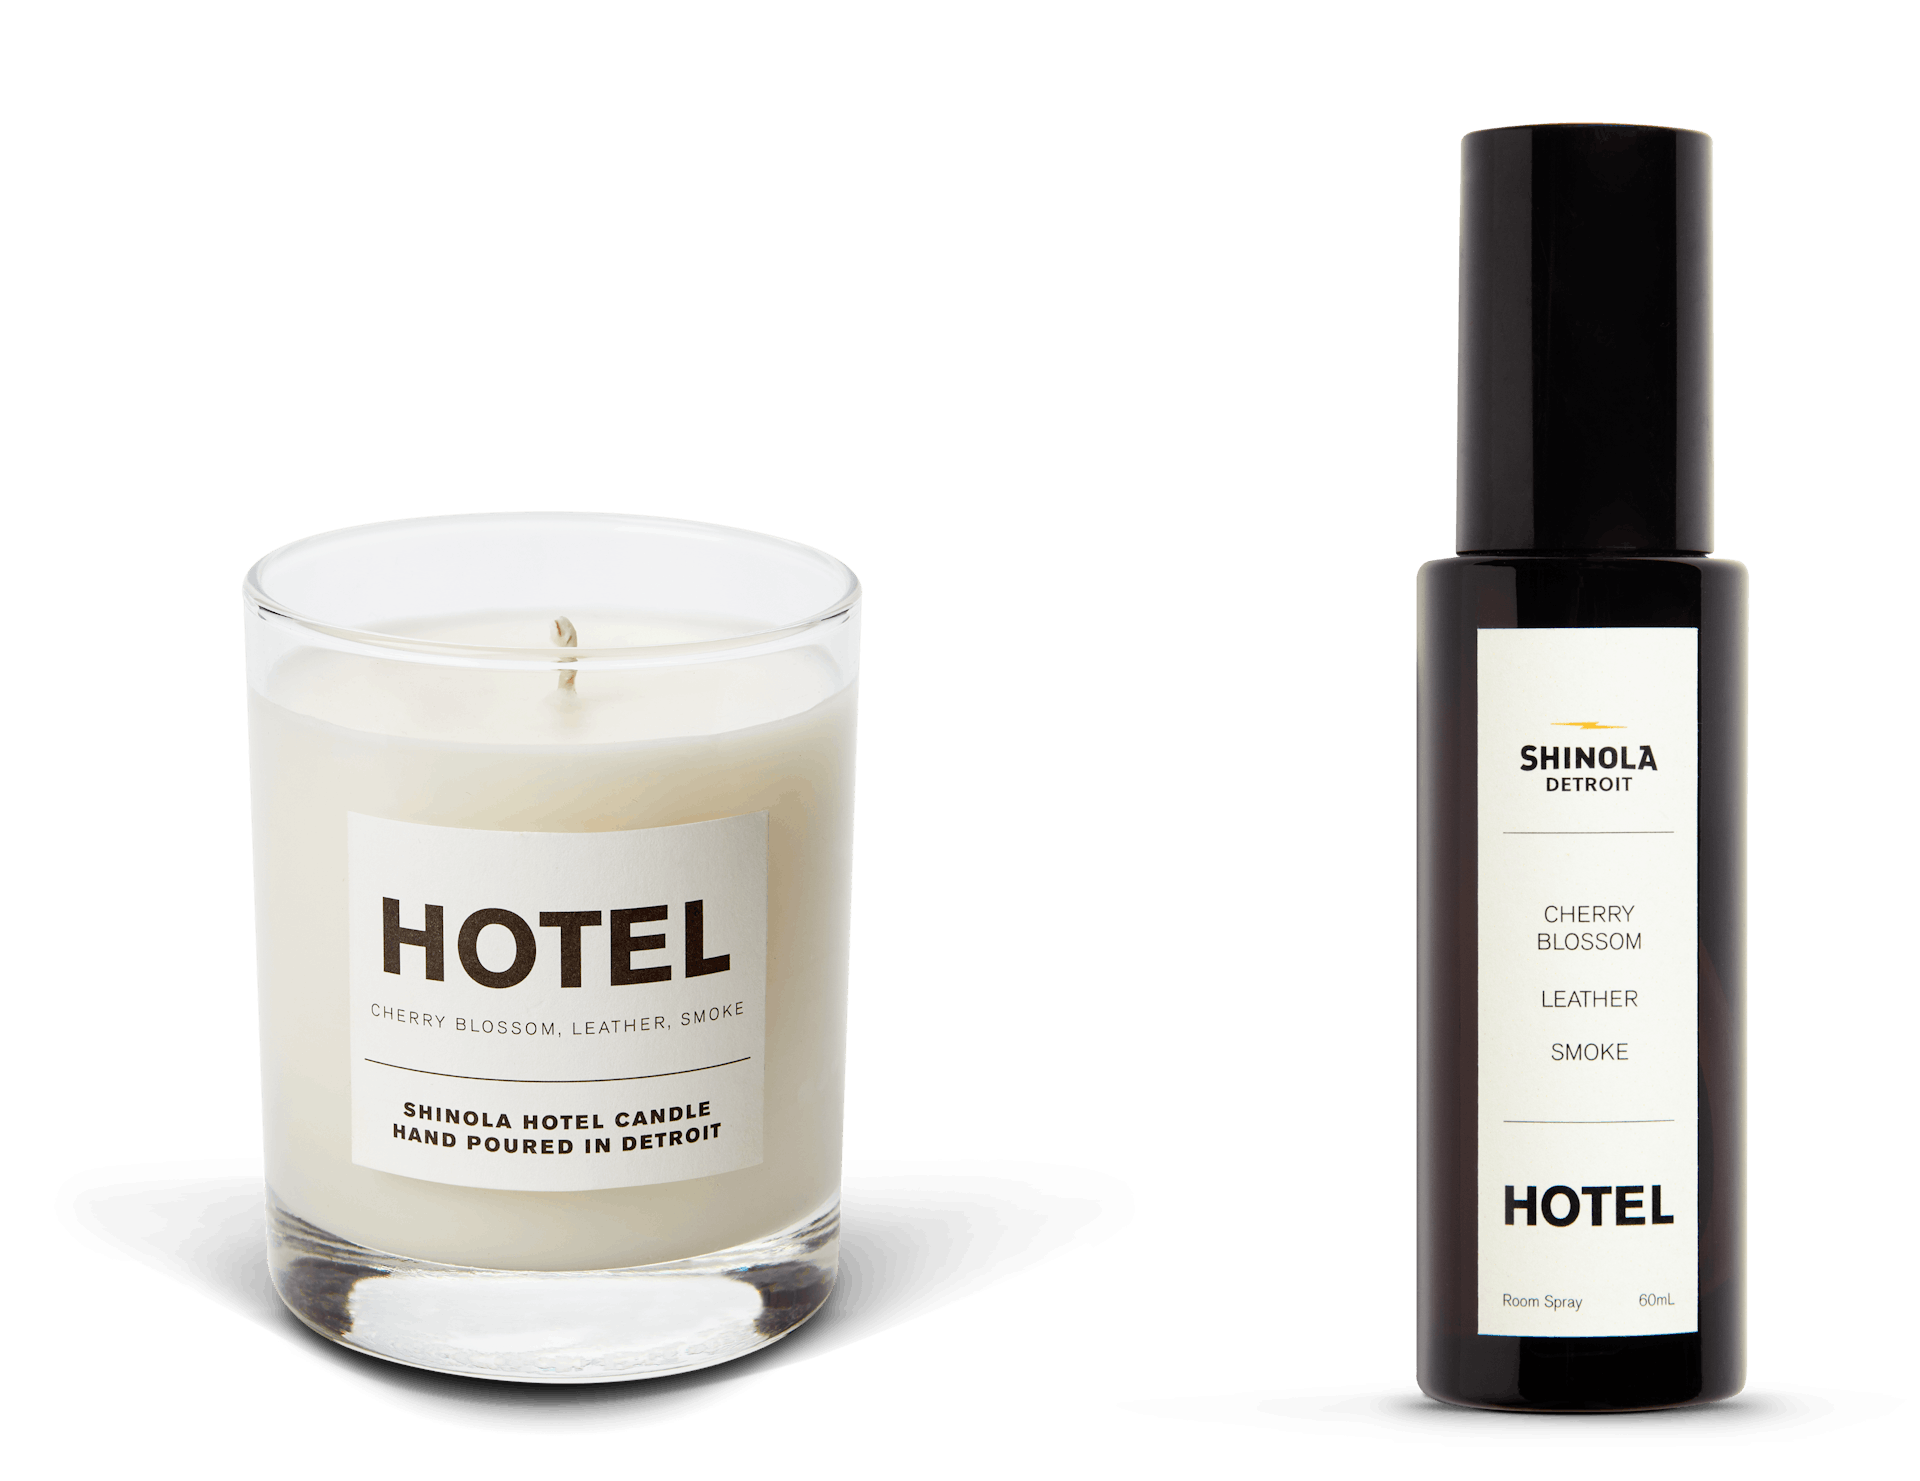 Shinola Hotel Products